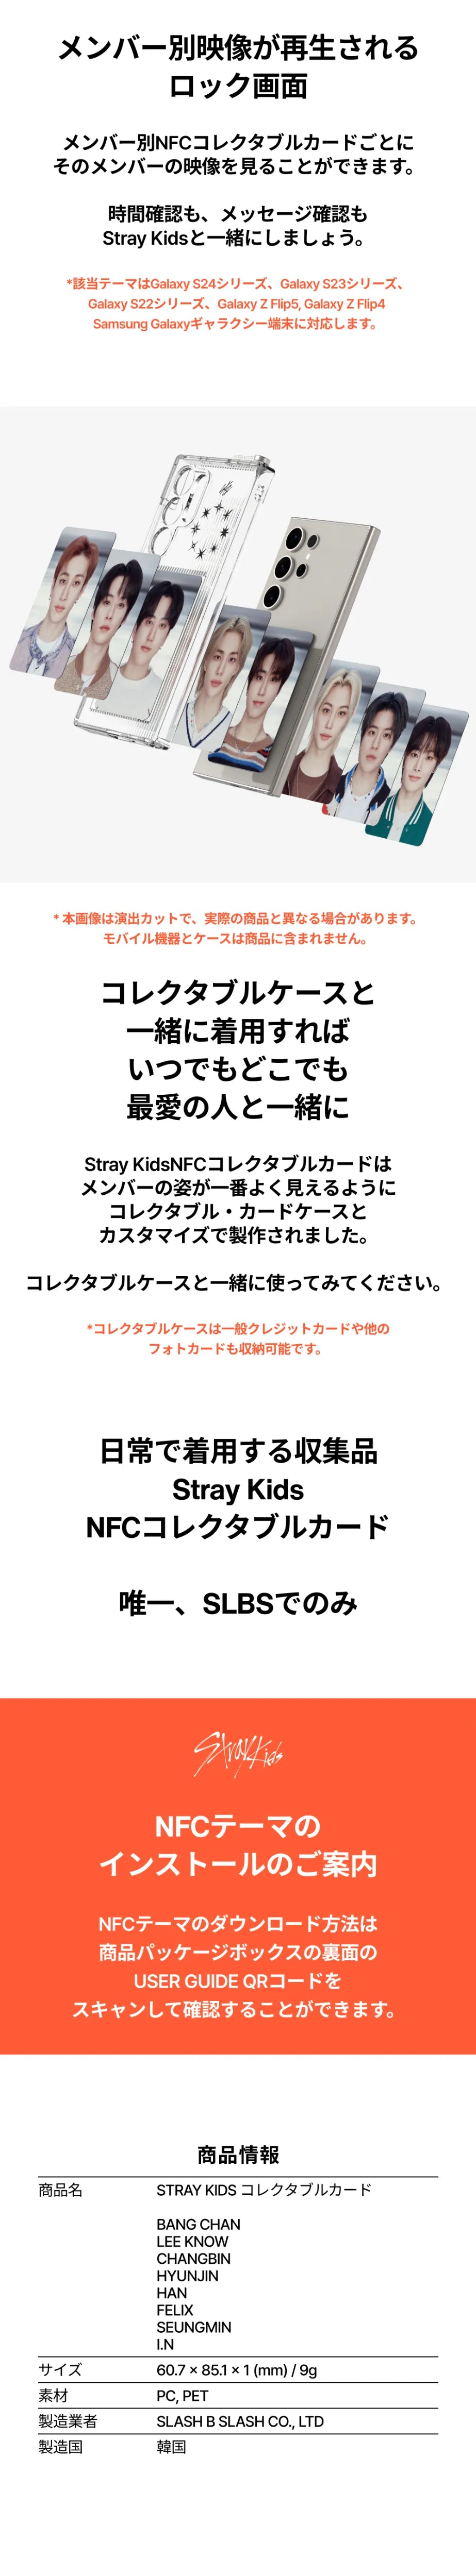 StrayKids NFC Collectable Card_HYUNJIN